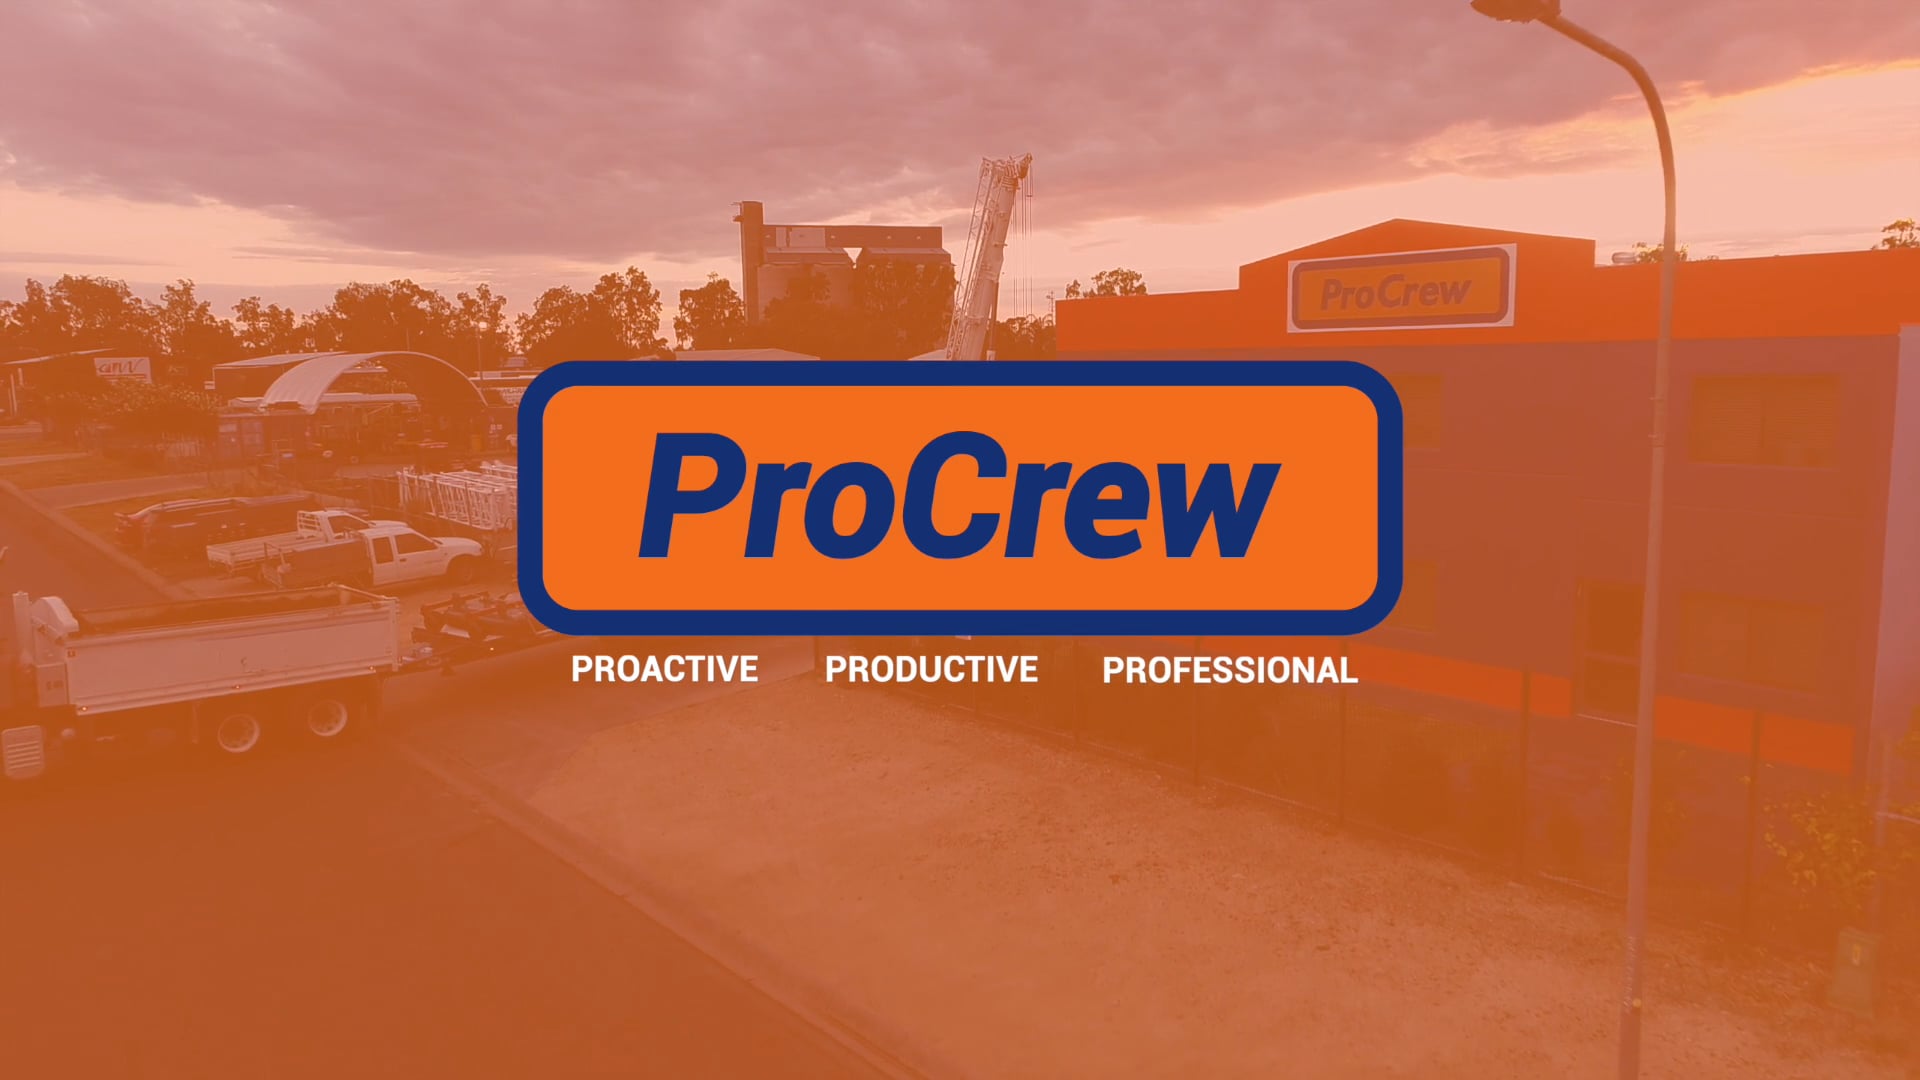 ProCrew (Proactive, Productive, Professional)